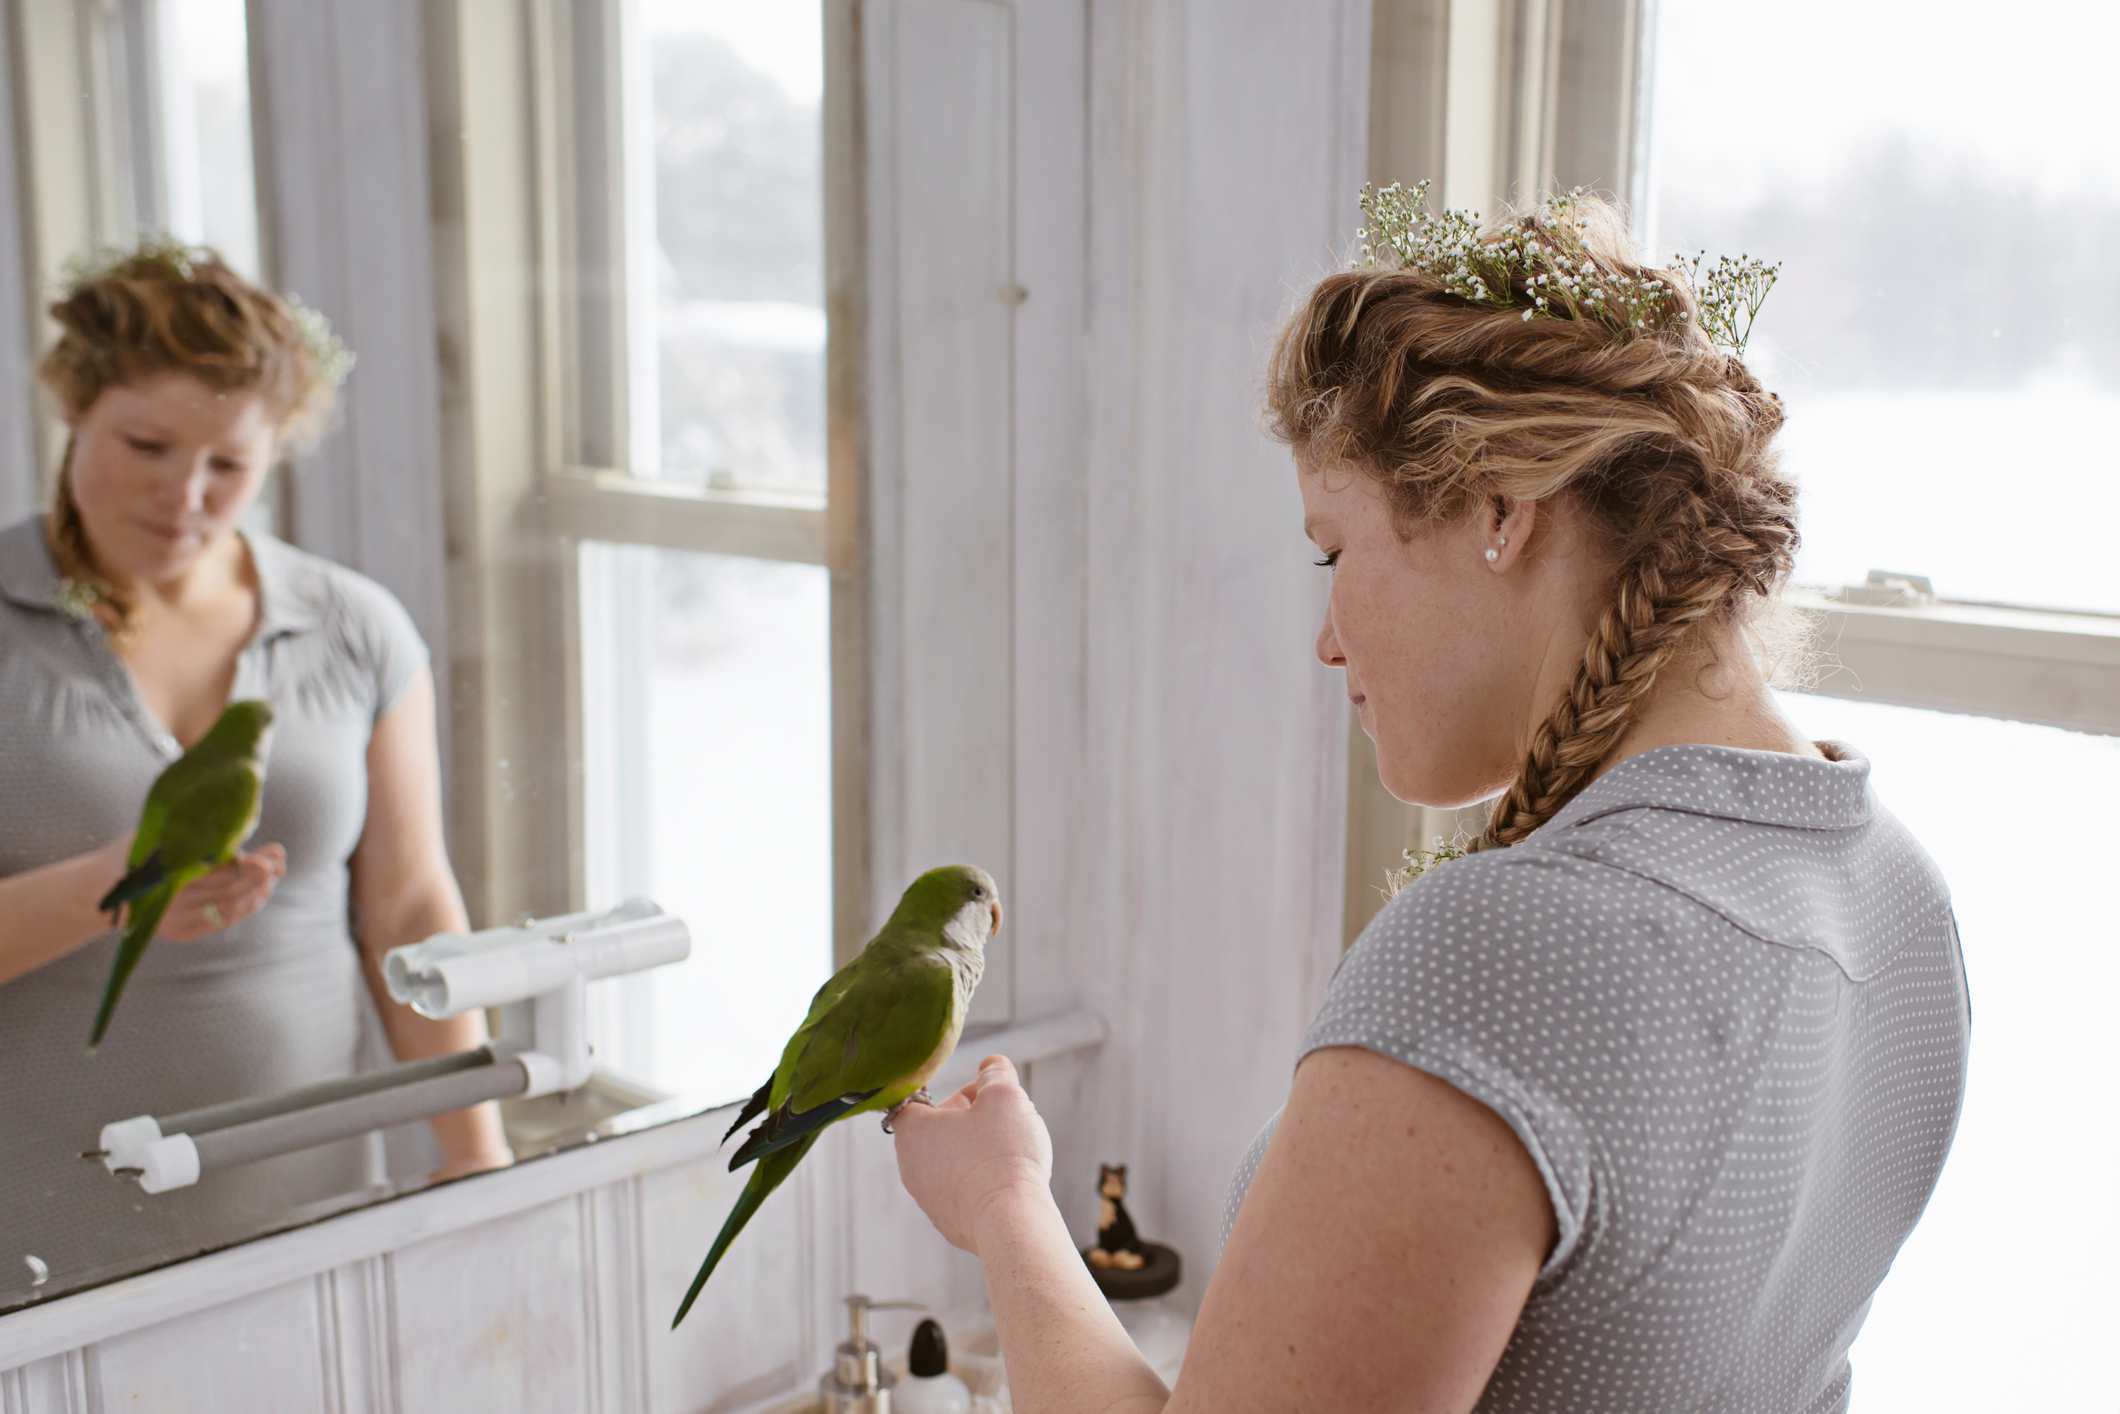 Woman talking to a quaker parrot